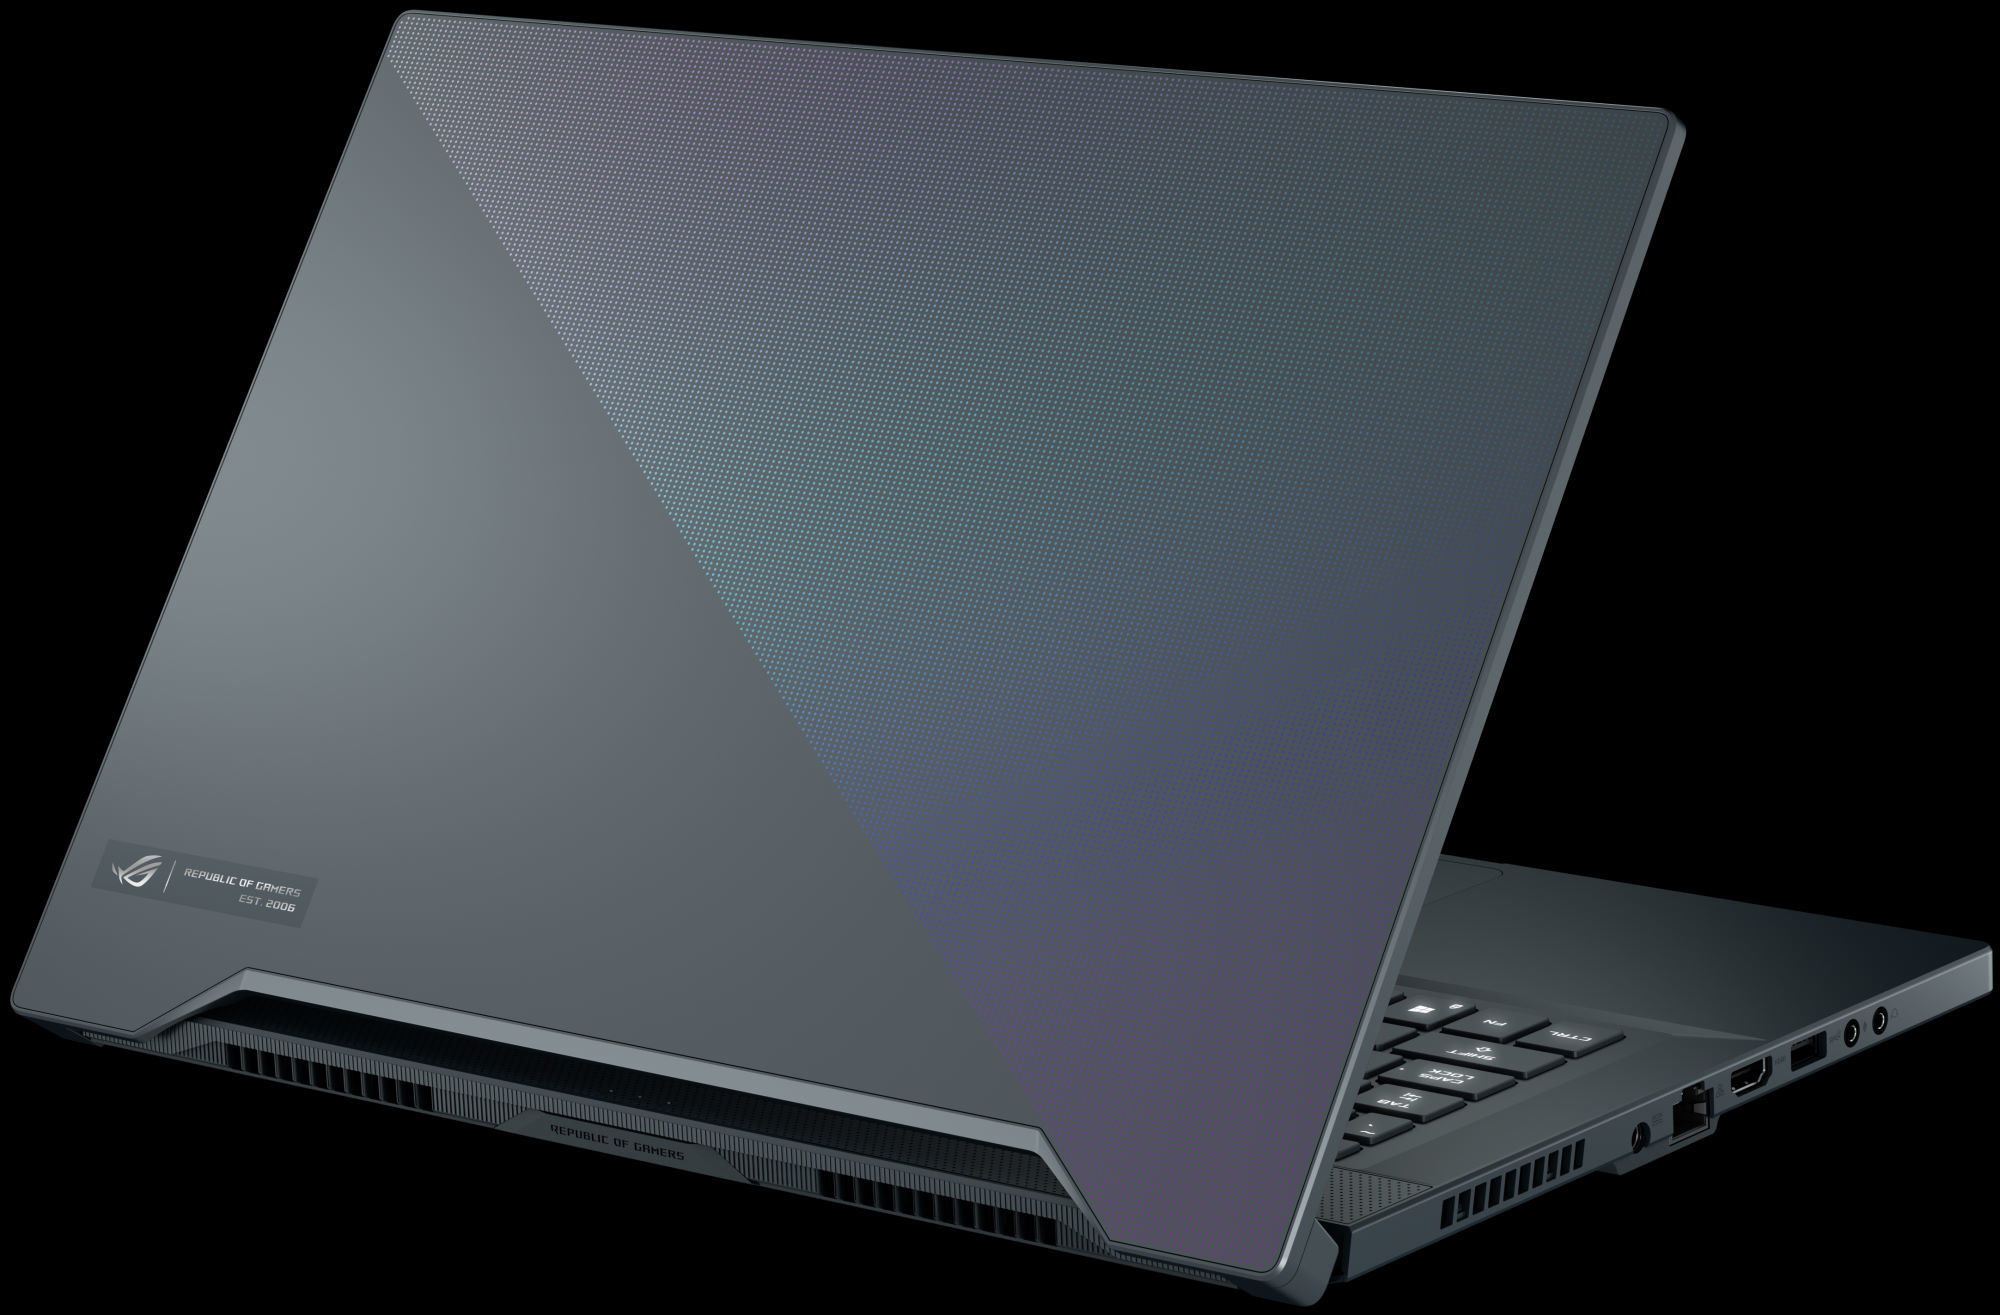 New ASUS ROG Zephyrus and Strix liquid metal cooling gaming laptops 1585819466268.jpg